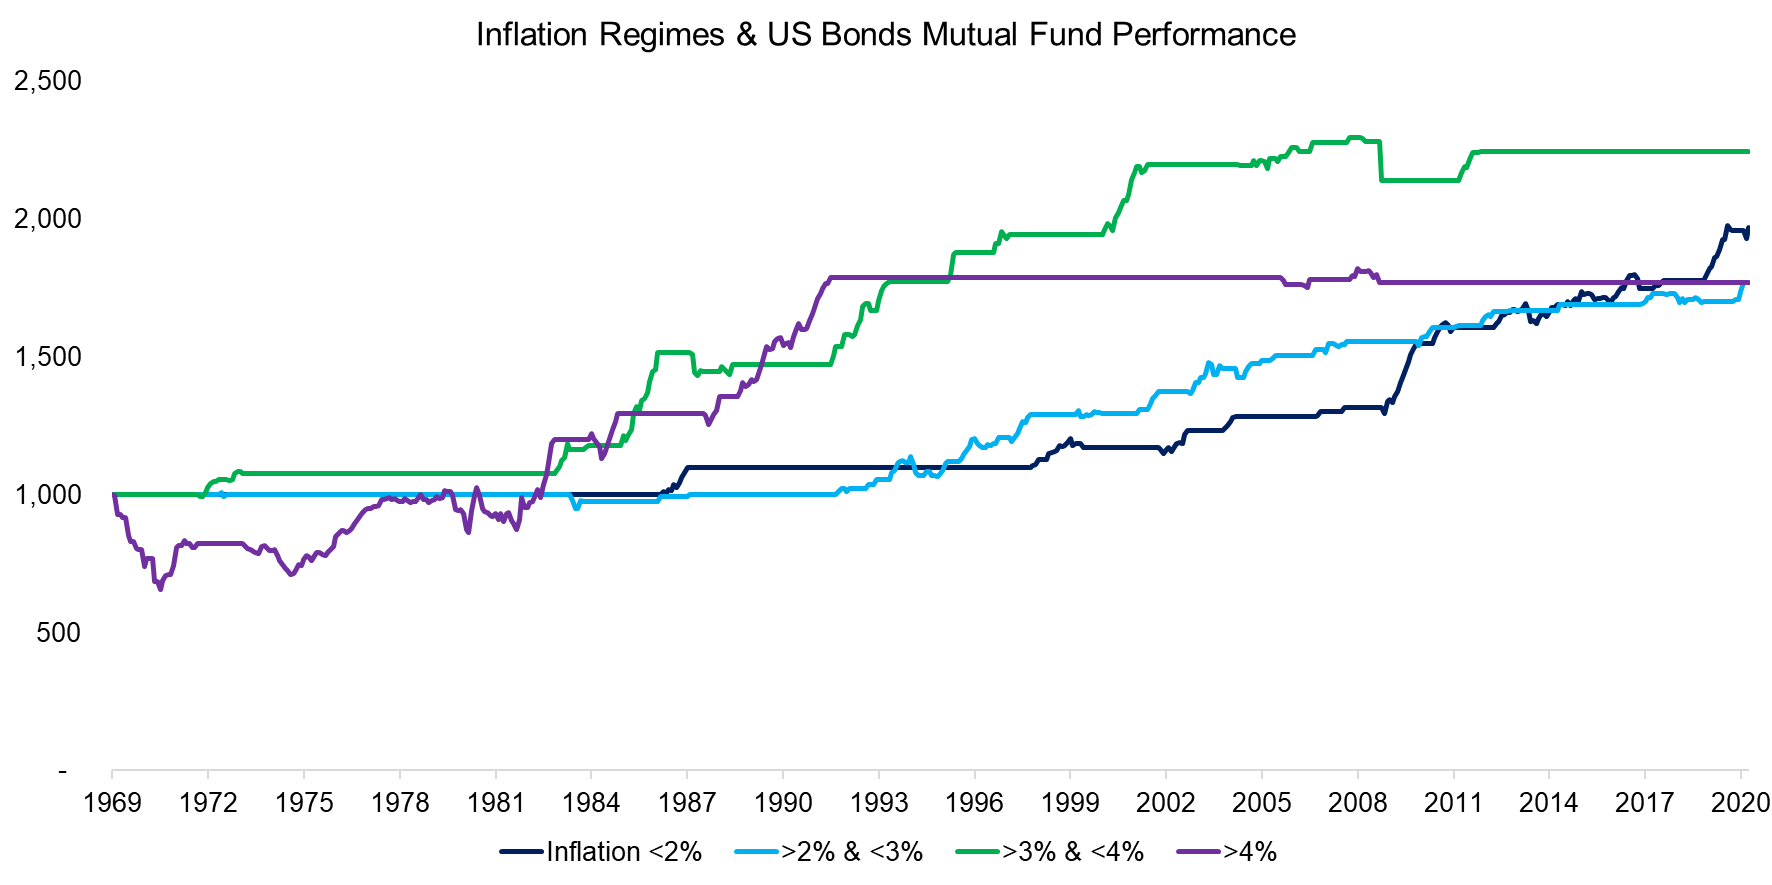 Inflation Regimes & US Bonds Mutual Fund Performance